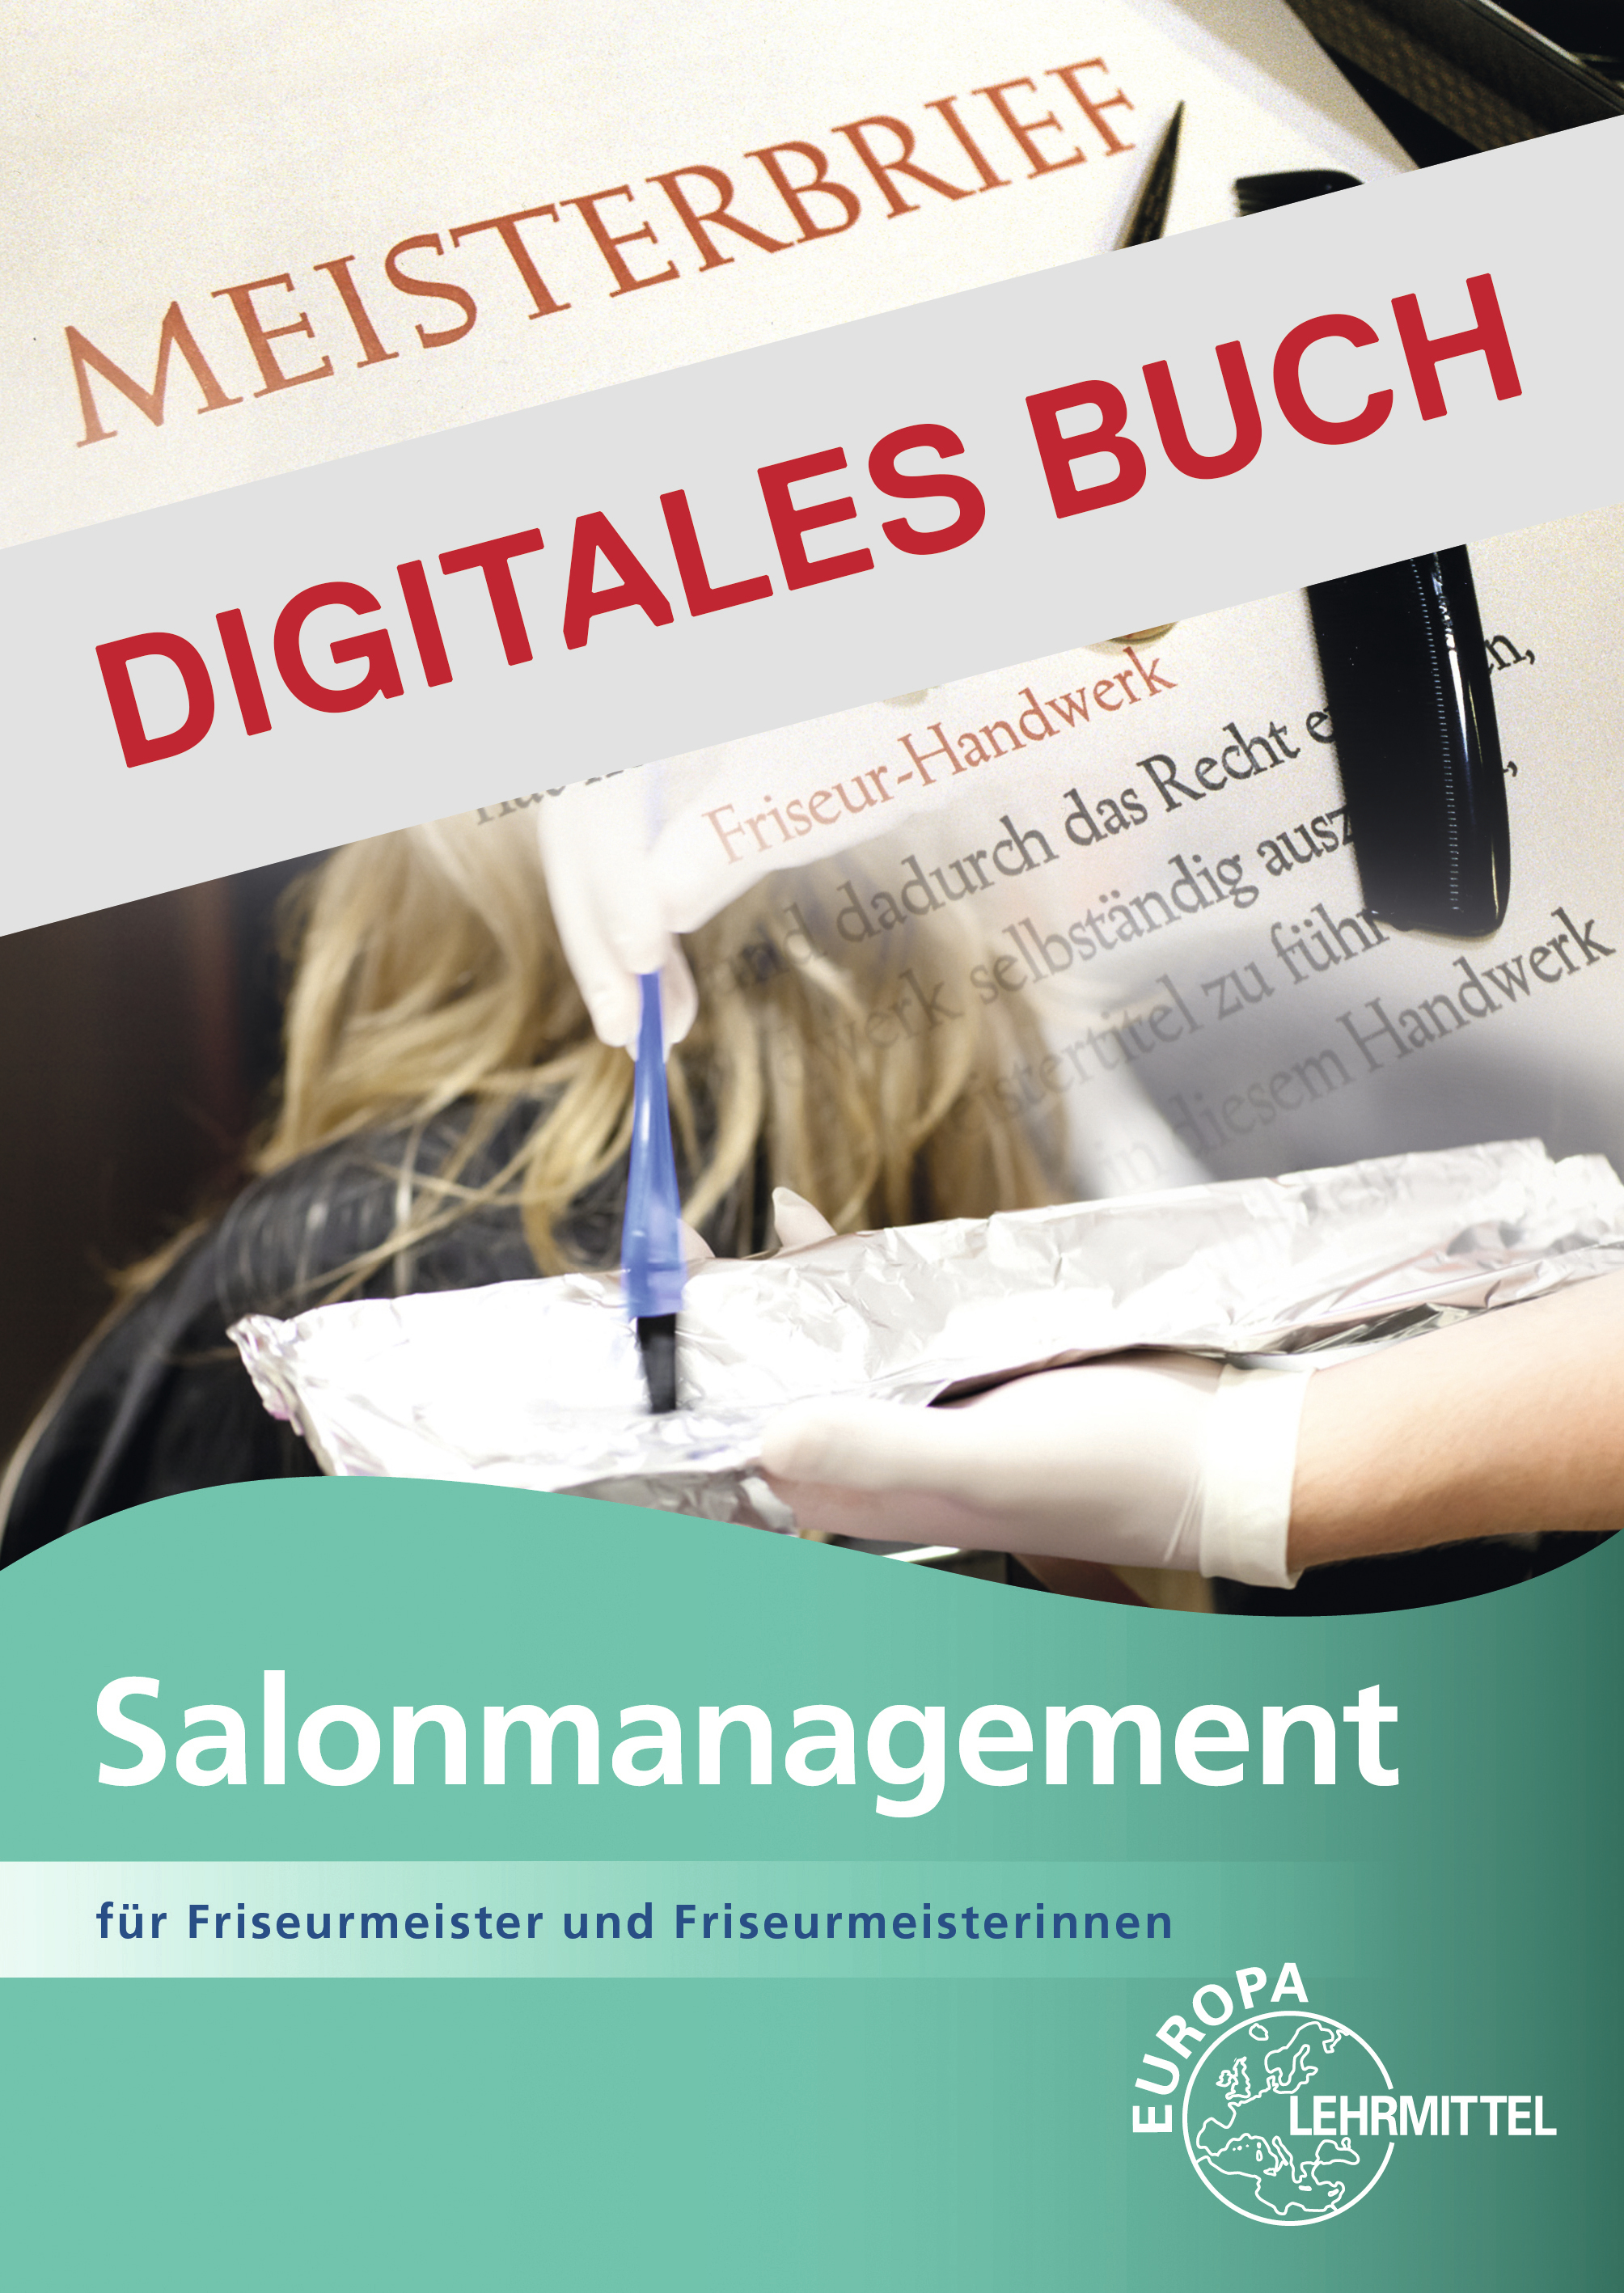 Salonmanagement - Digitales Buch